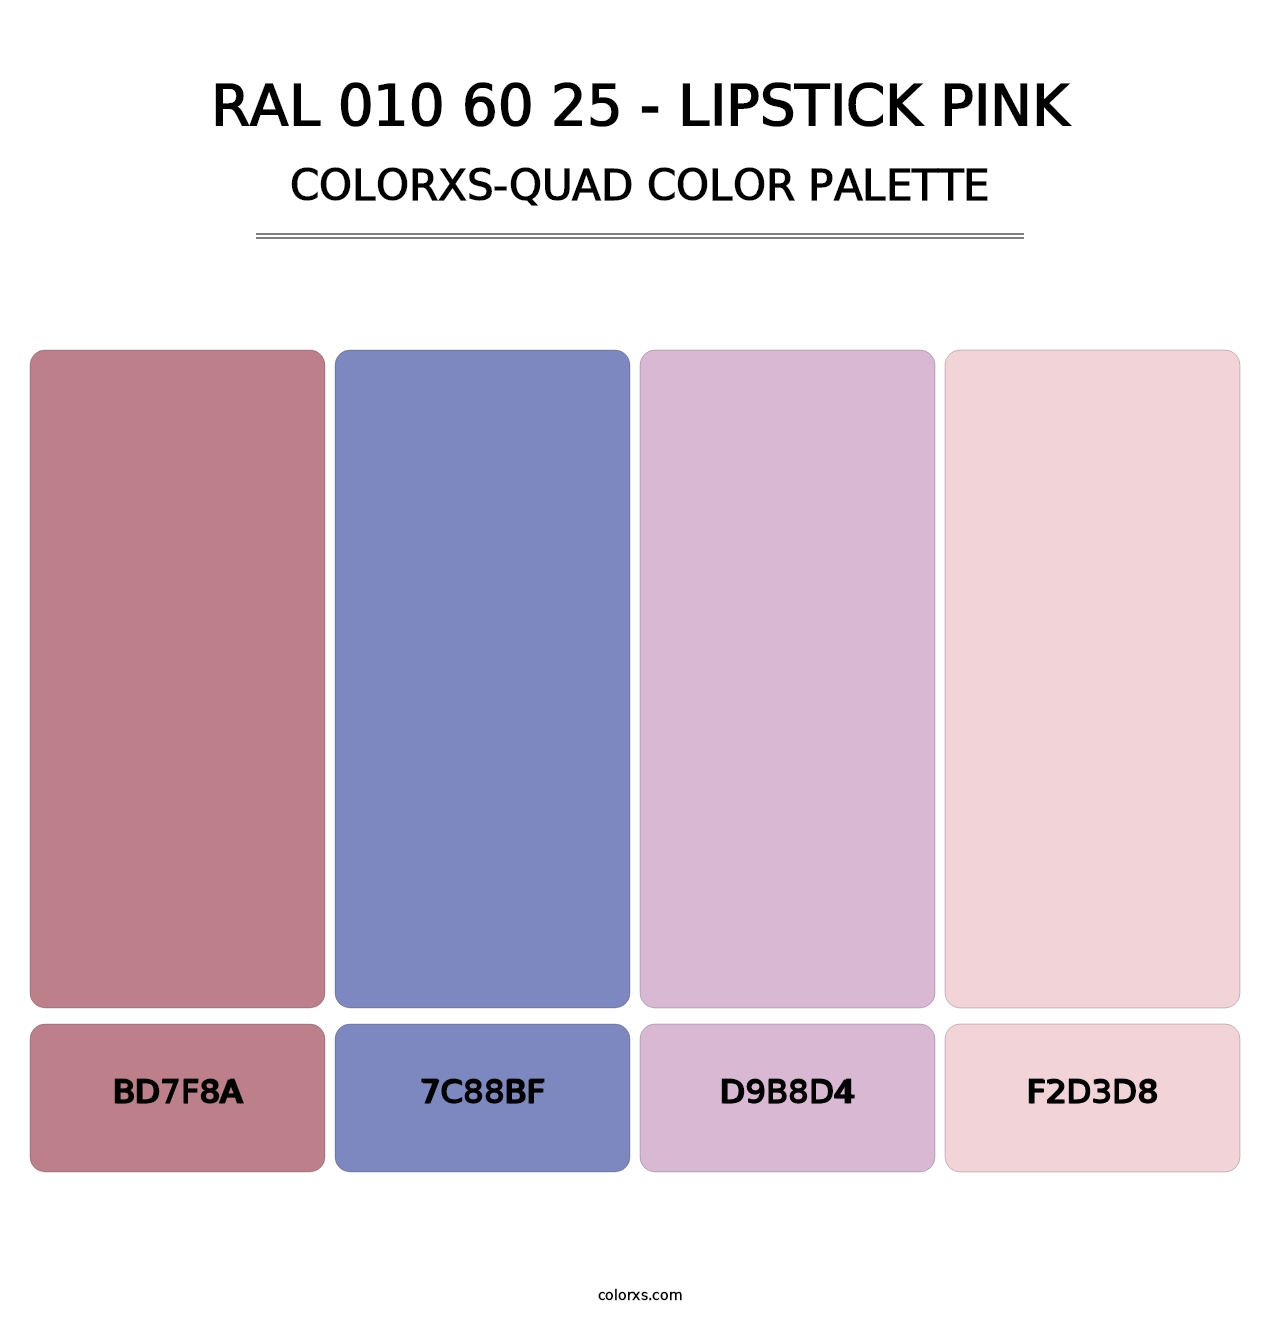 RAL 010 60 25 - Lipstick Pink - Colorxs Quad Palette